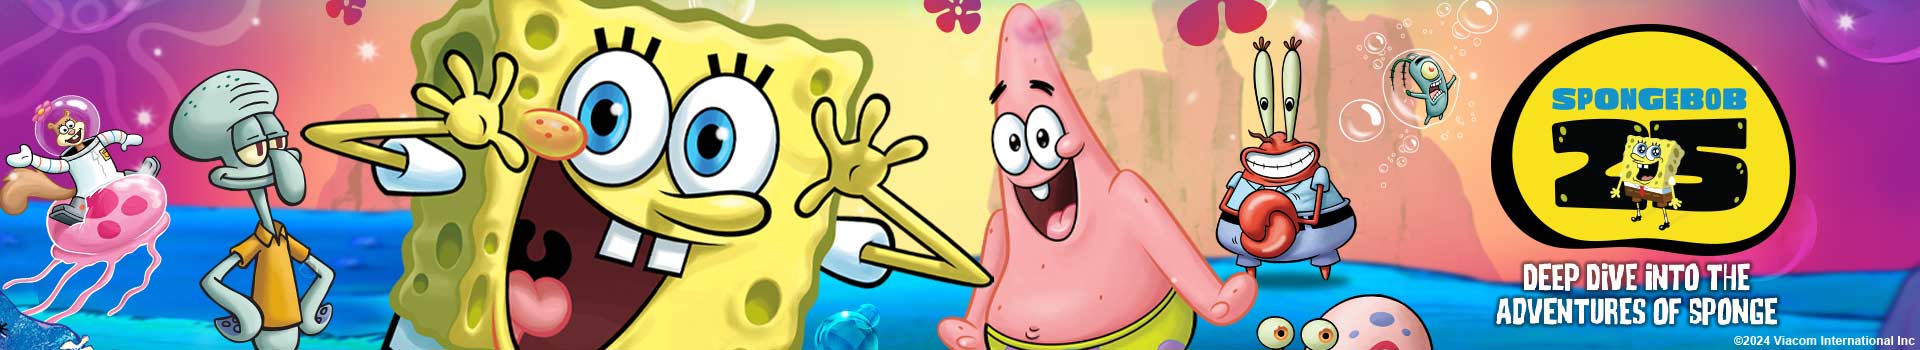 SpongeBob SquarePants Official Merchandise